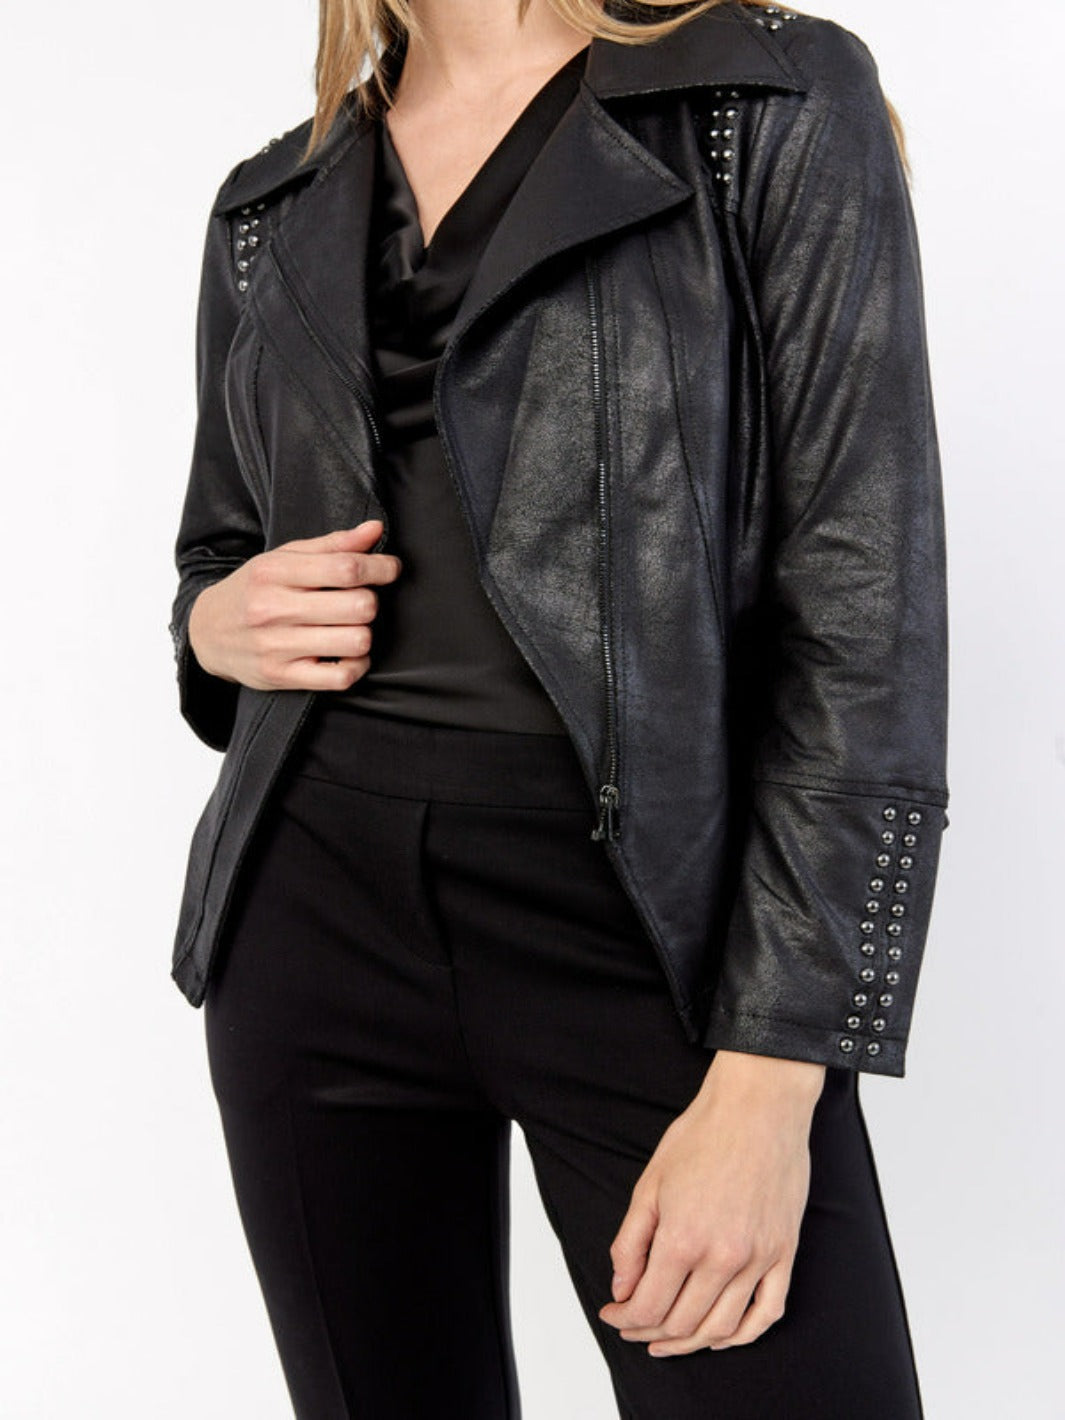 Joseph Ribkoff - Studded Shoulder Jacket in Black 233926-Nicola Ross